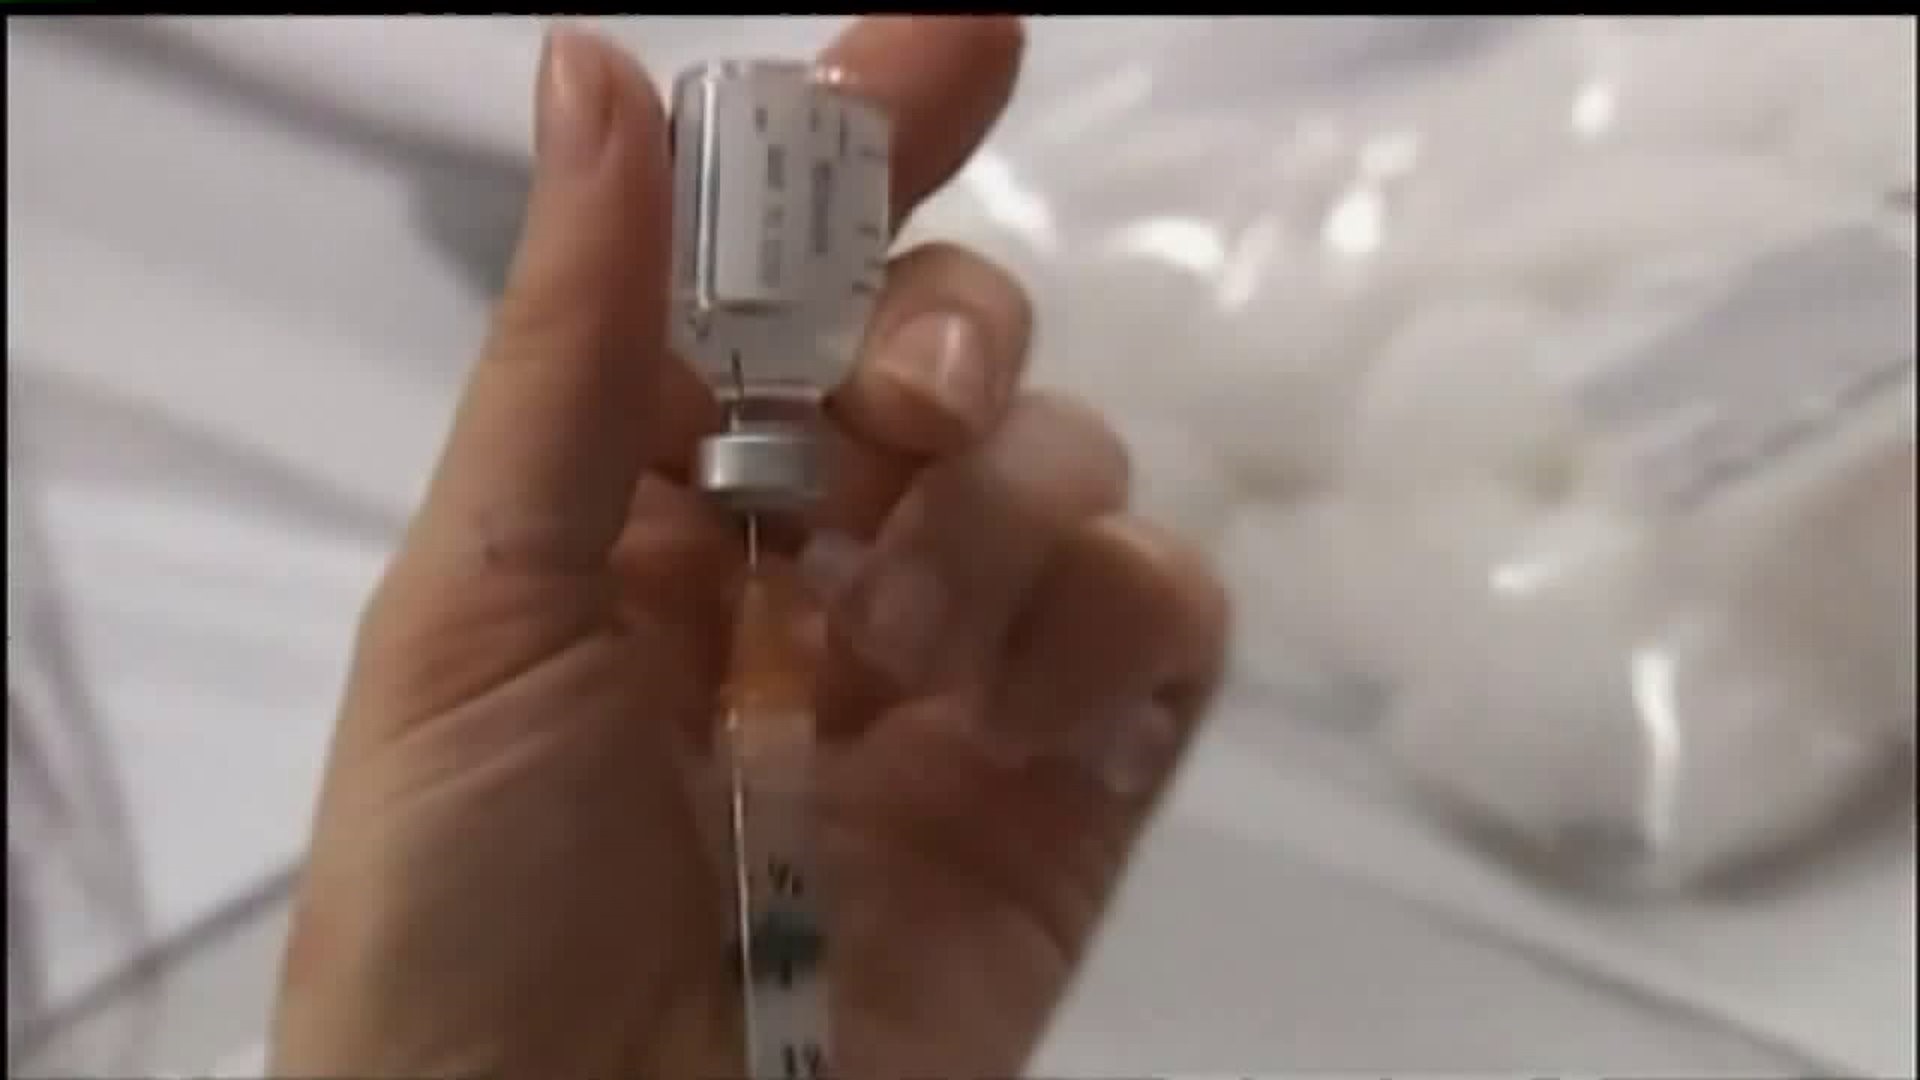 Pennsylvania flu season starting to ramp up